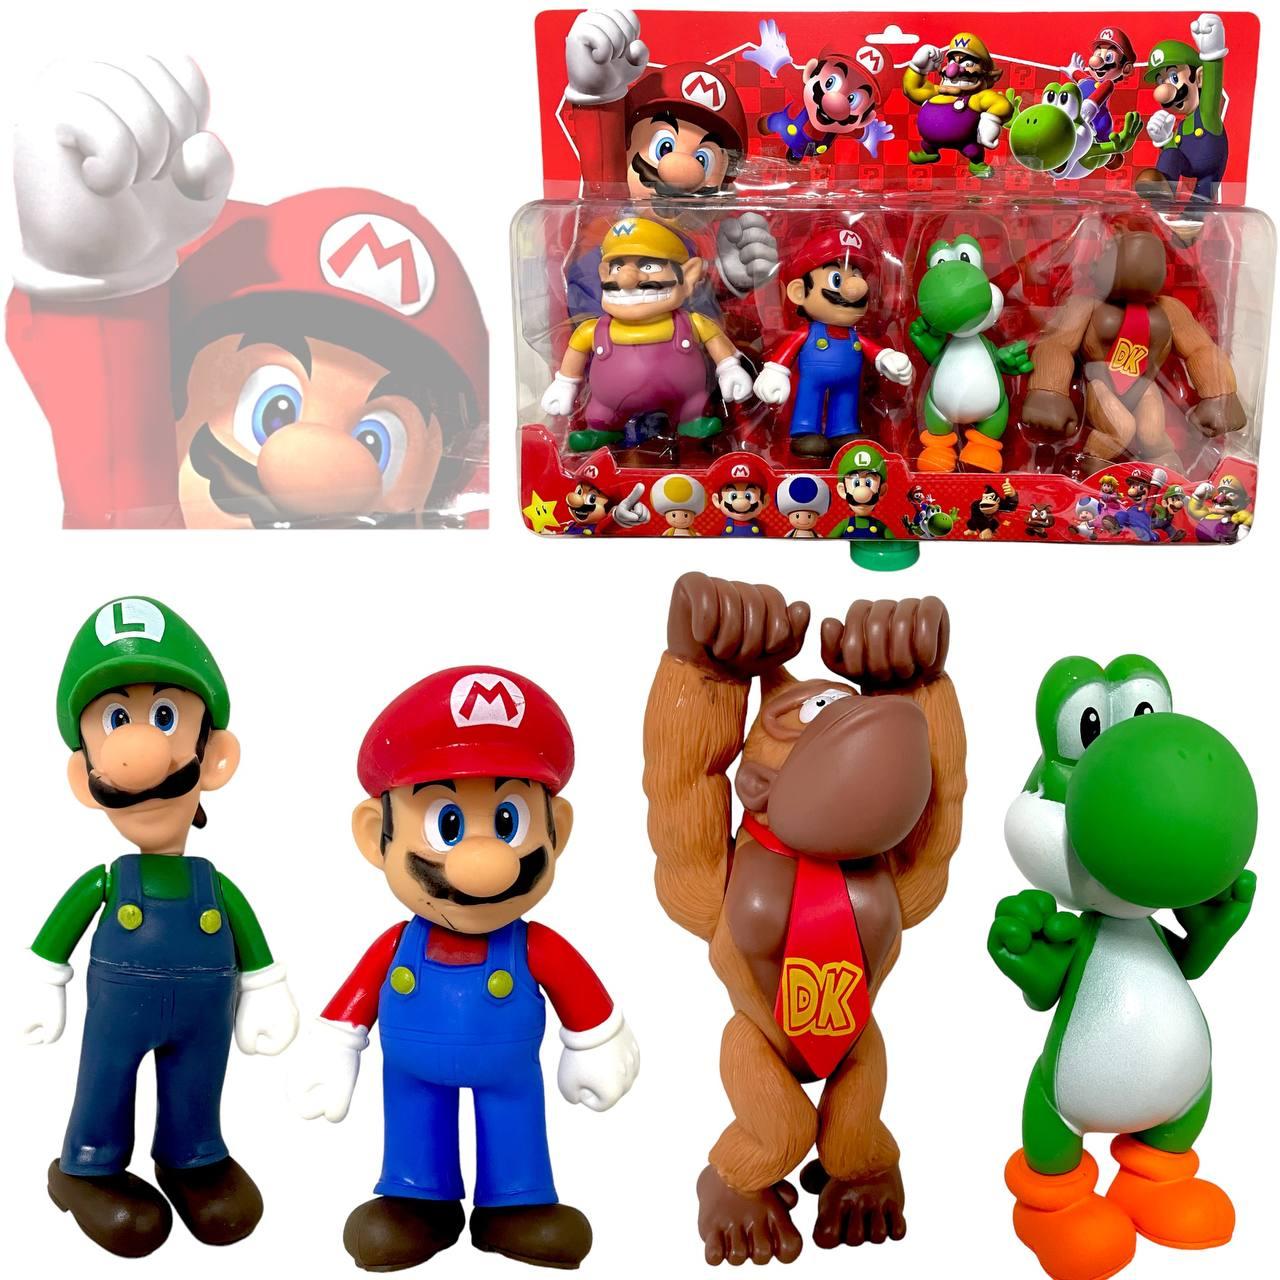 815588 Super Mario фигурки Супермарио 4шт (персонаж мультика/игры) 31х42см